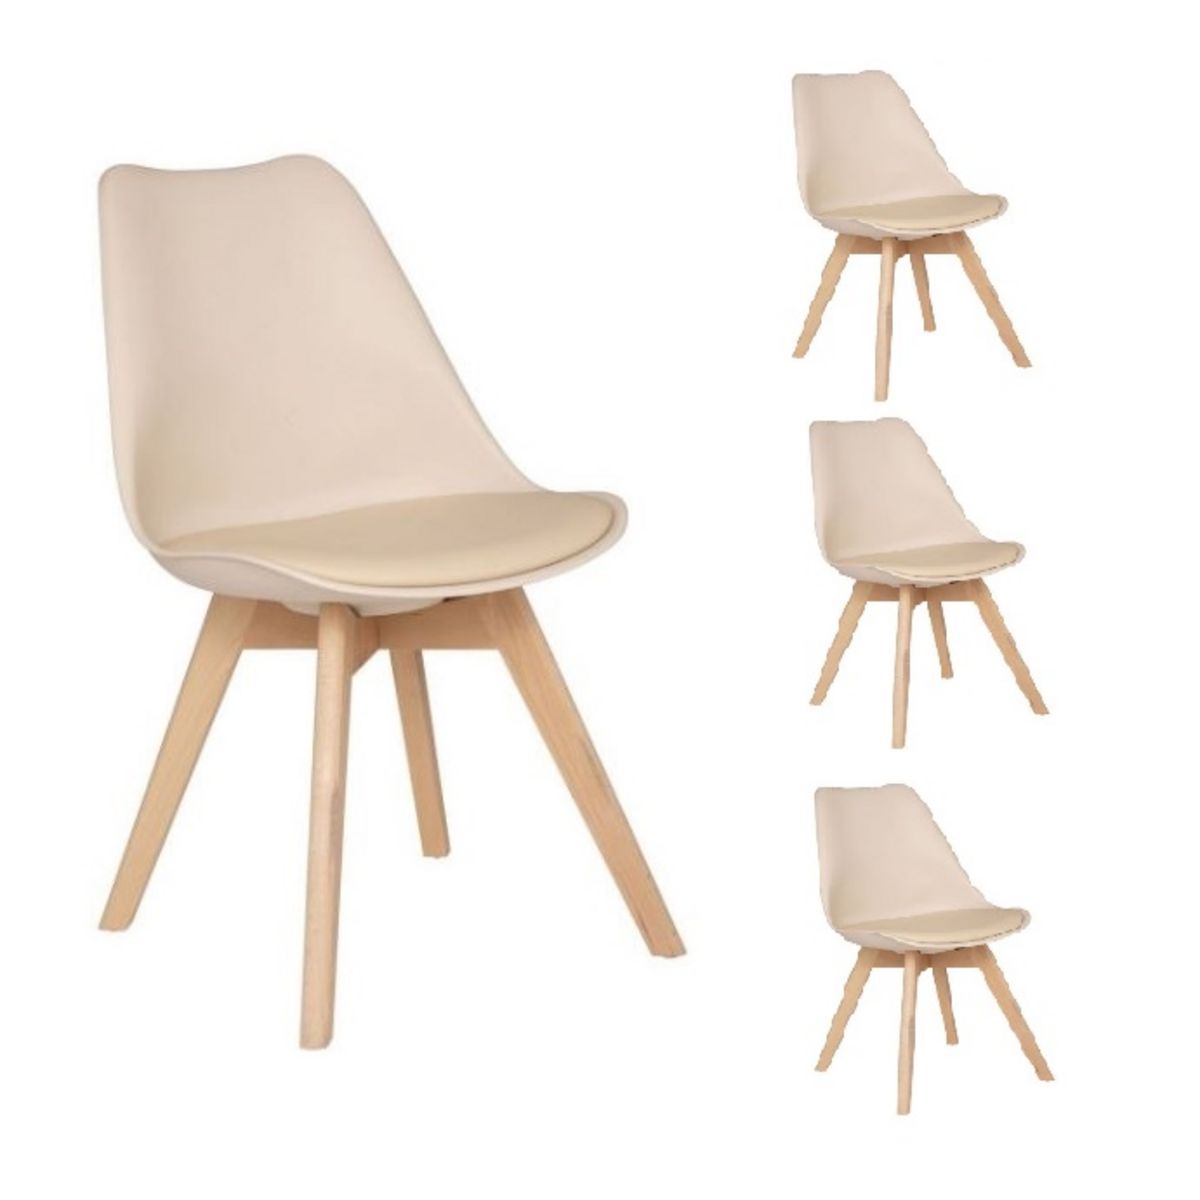 ATMOSPHERA Lot de 4 chaises style scandinave pieds bois massif coloris beige OPRA